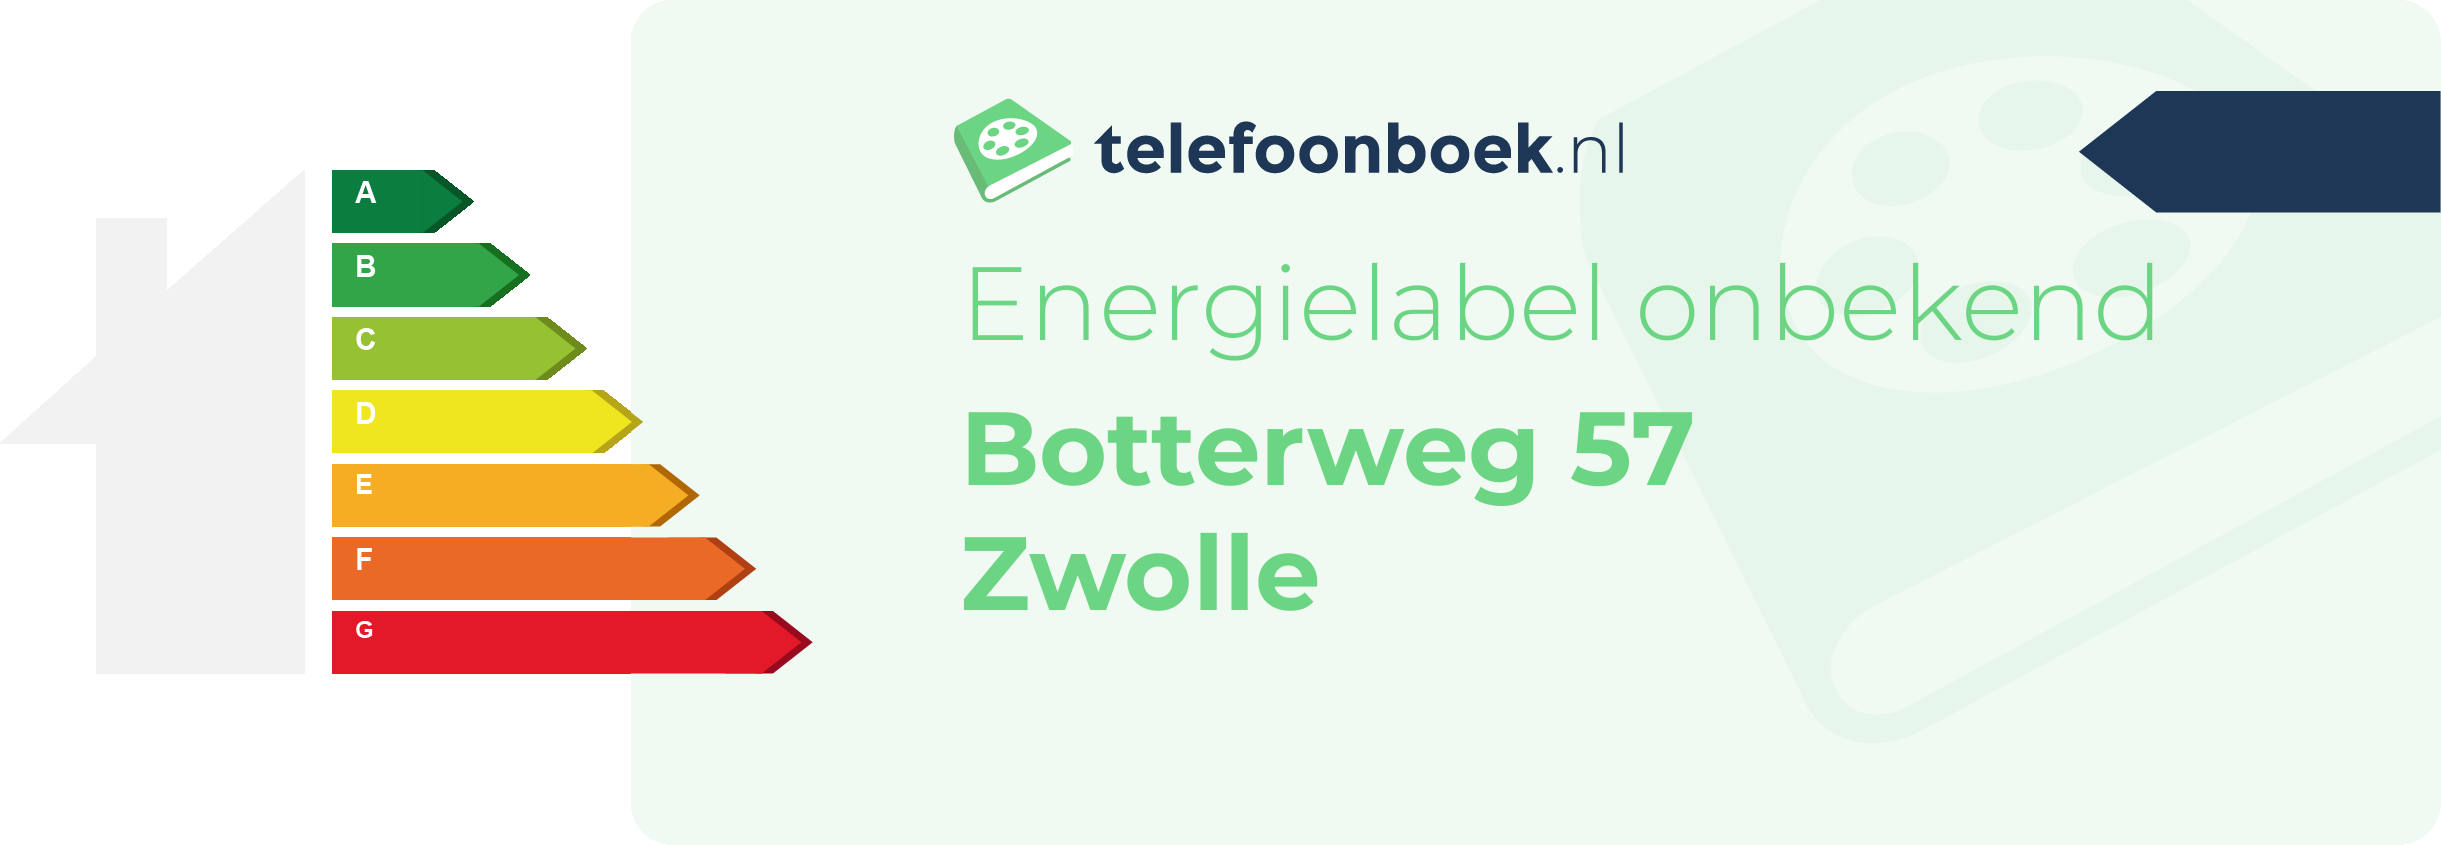 Energielabel Botterweg 57 Zwolle